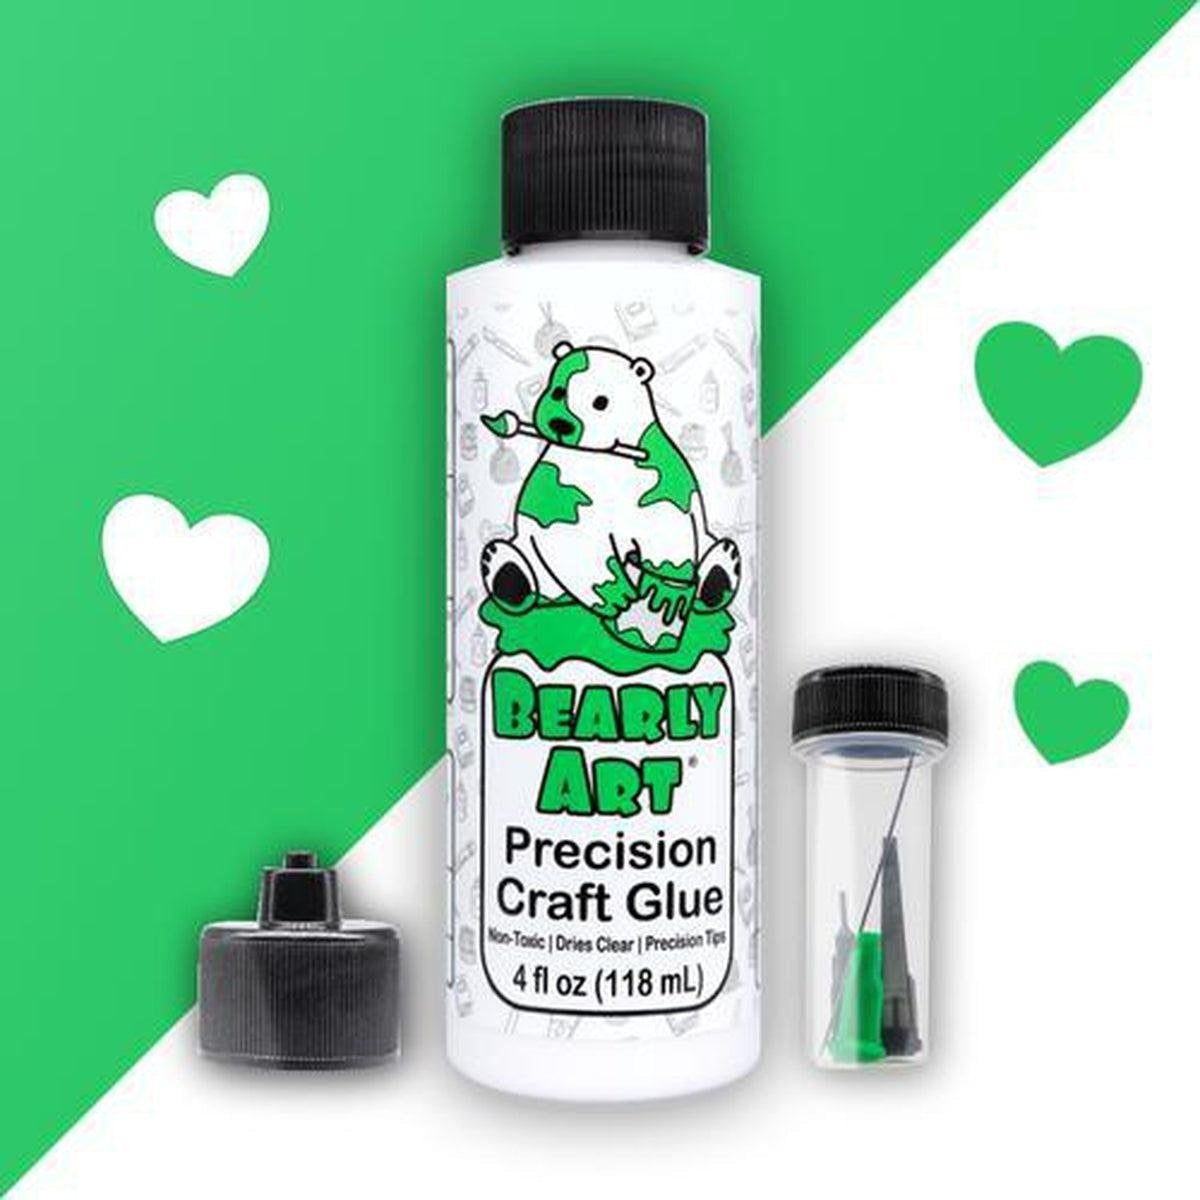 Bearly Art - Precision Craft Glue - The Refill